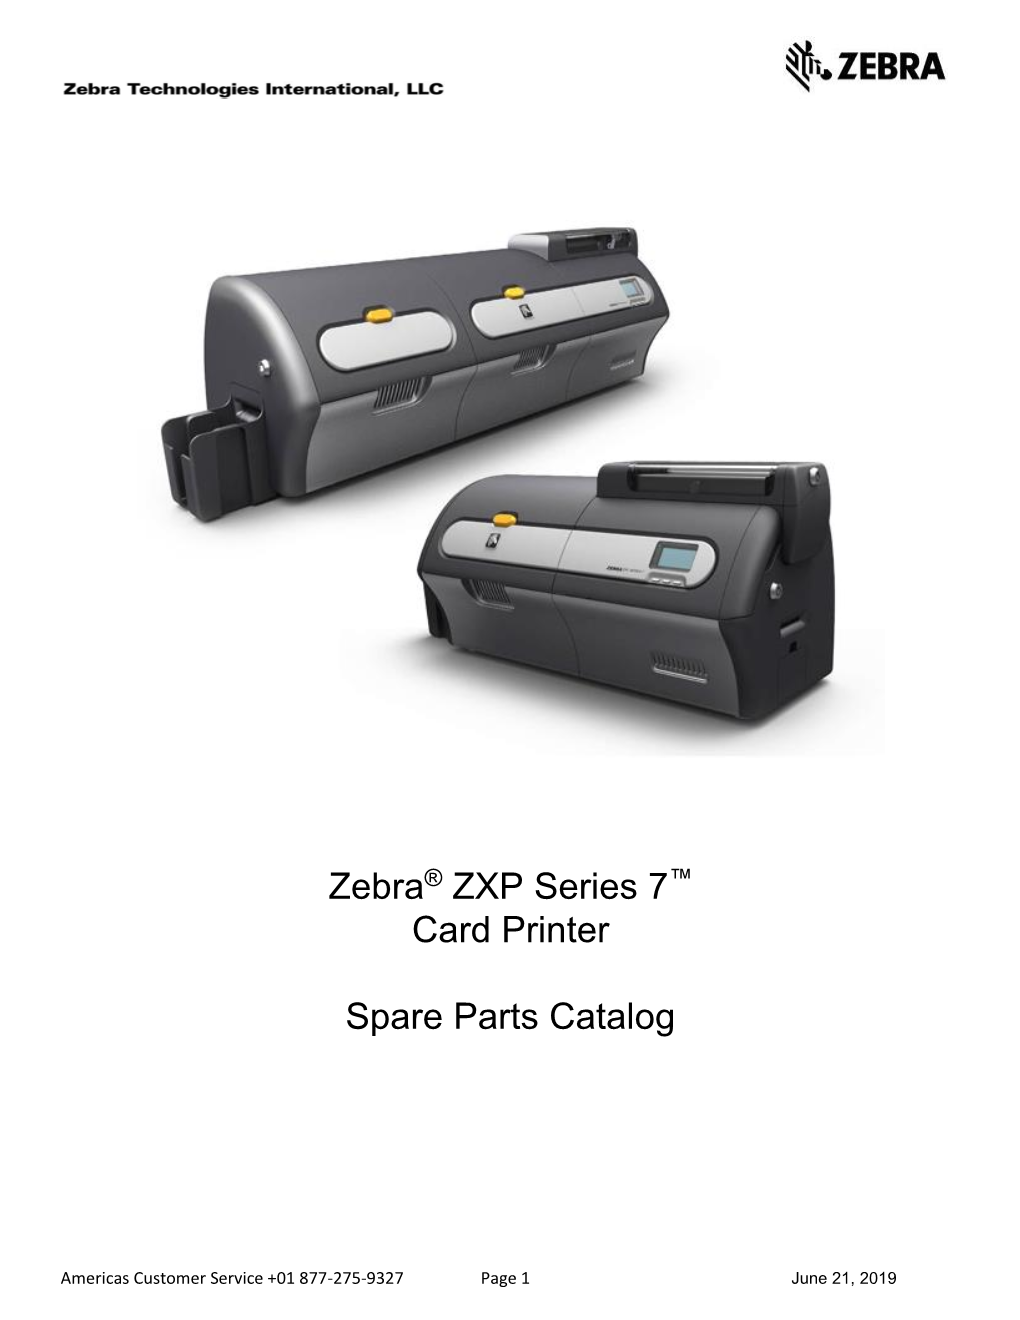 Zebra® ZXP Series 7 Card Printer Spare Parts Catalog